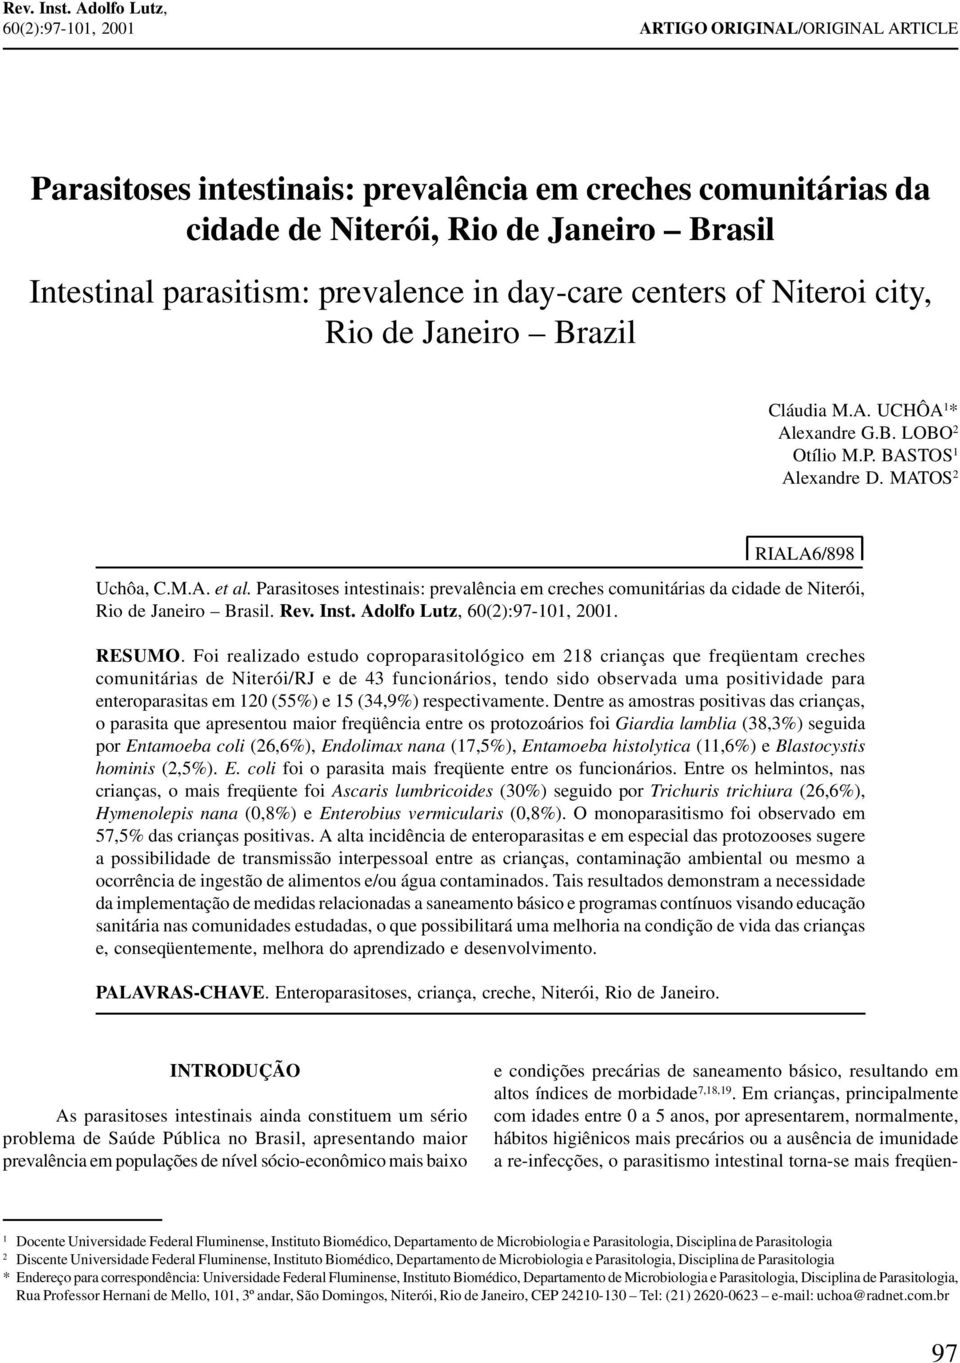 Niteroi city, Rio de Janeiro Brazil Cláudia M.A. UCHÔA 1 * Alexandre G.B. LOBO 2 Otílio M.P. BASTOS 1 Alexandre D. MATOS 2 RIALA6/898 Uchôa, C.M.A. et al.